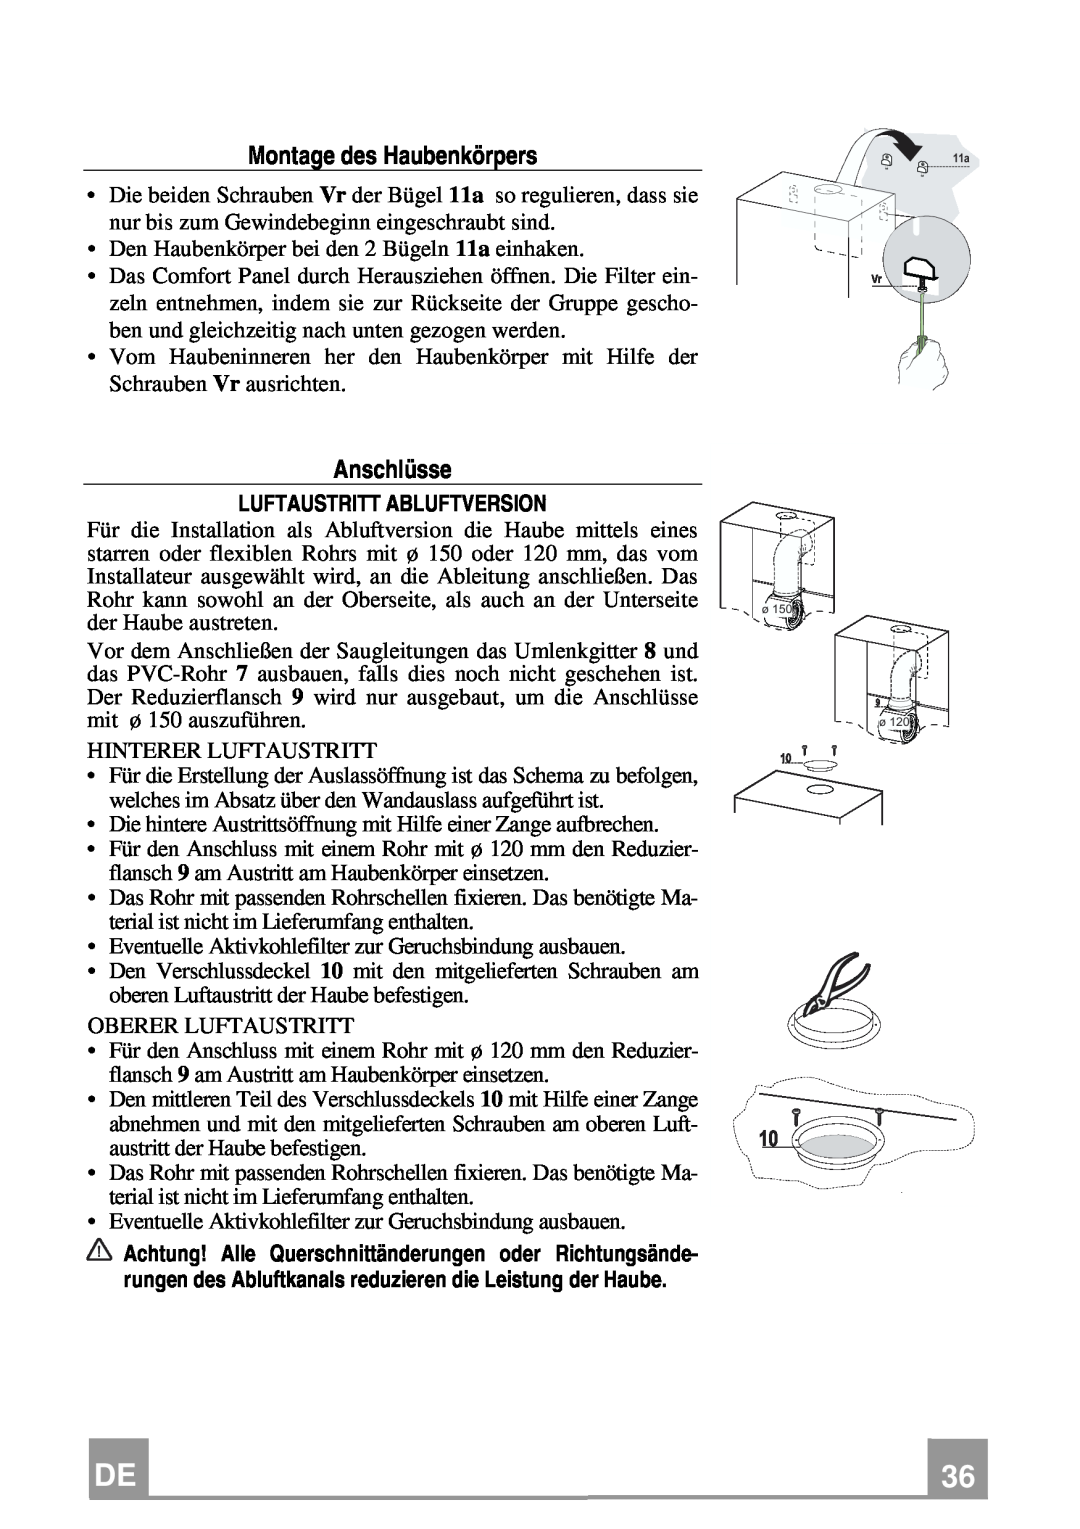 Franke Consumer Products FCR 708-H TC manual Montage des Haubenkörpers, Anschlüsse, Luftaustritt Abluftversion 